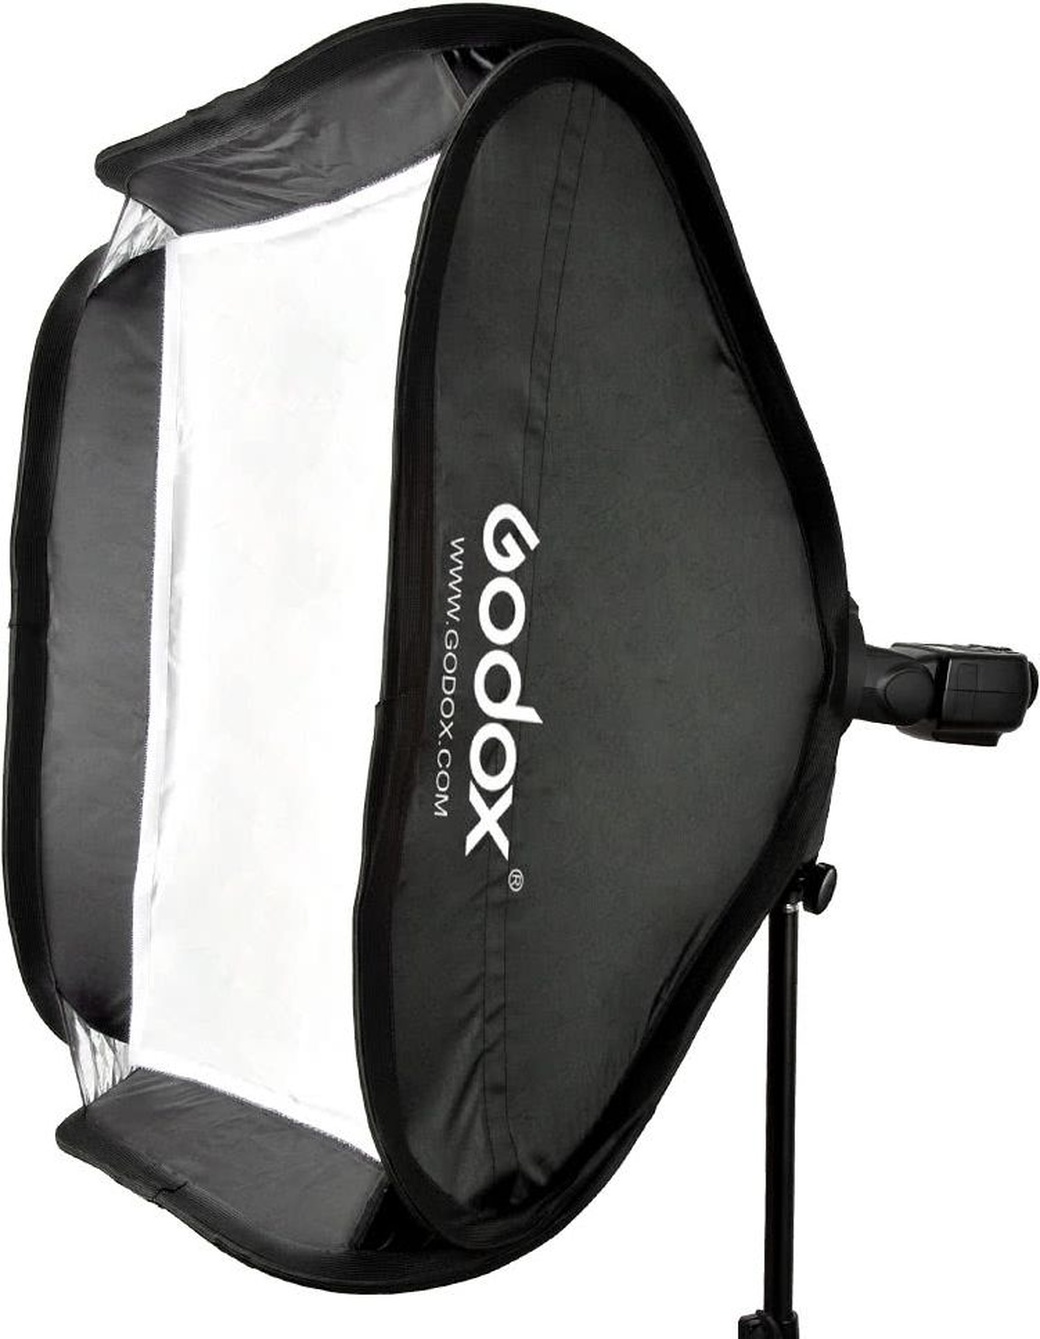 Софтбокс Godox 80x80 см с кронштейном S-типа для Speedlite Flash Light фото